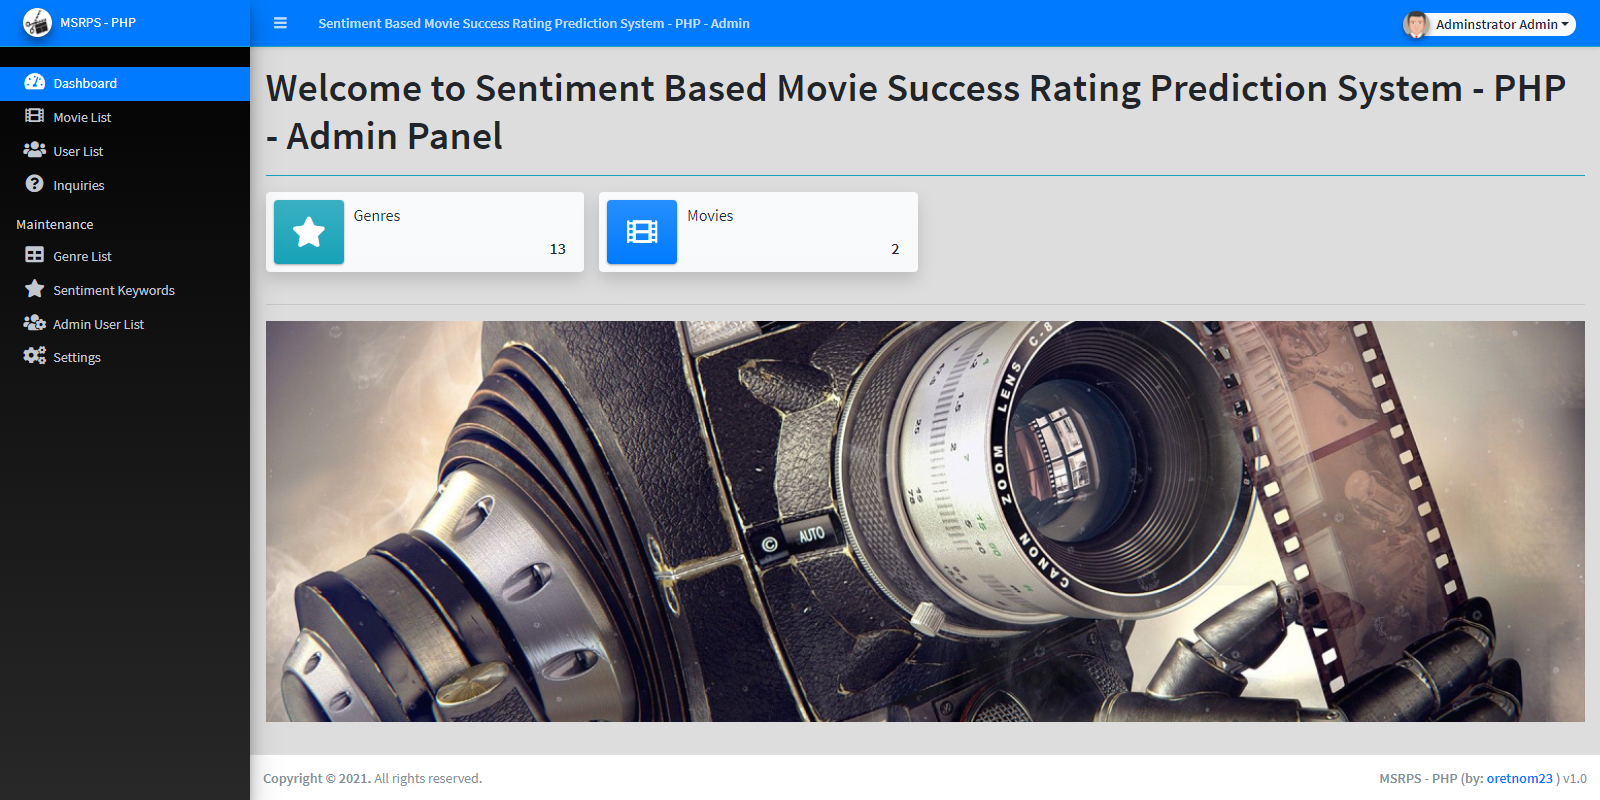 Sentiment Based Movie Rating System